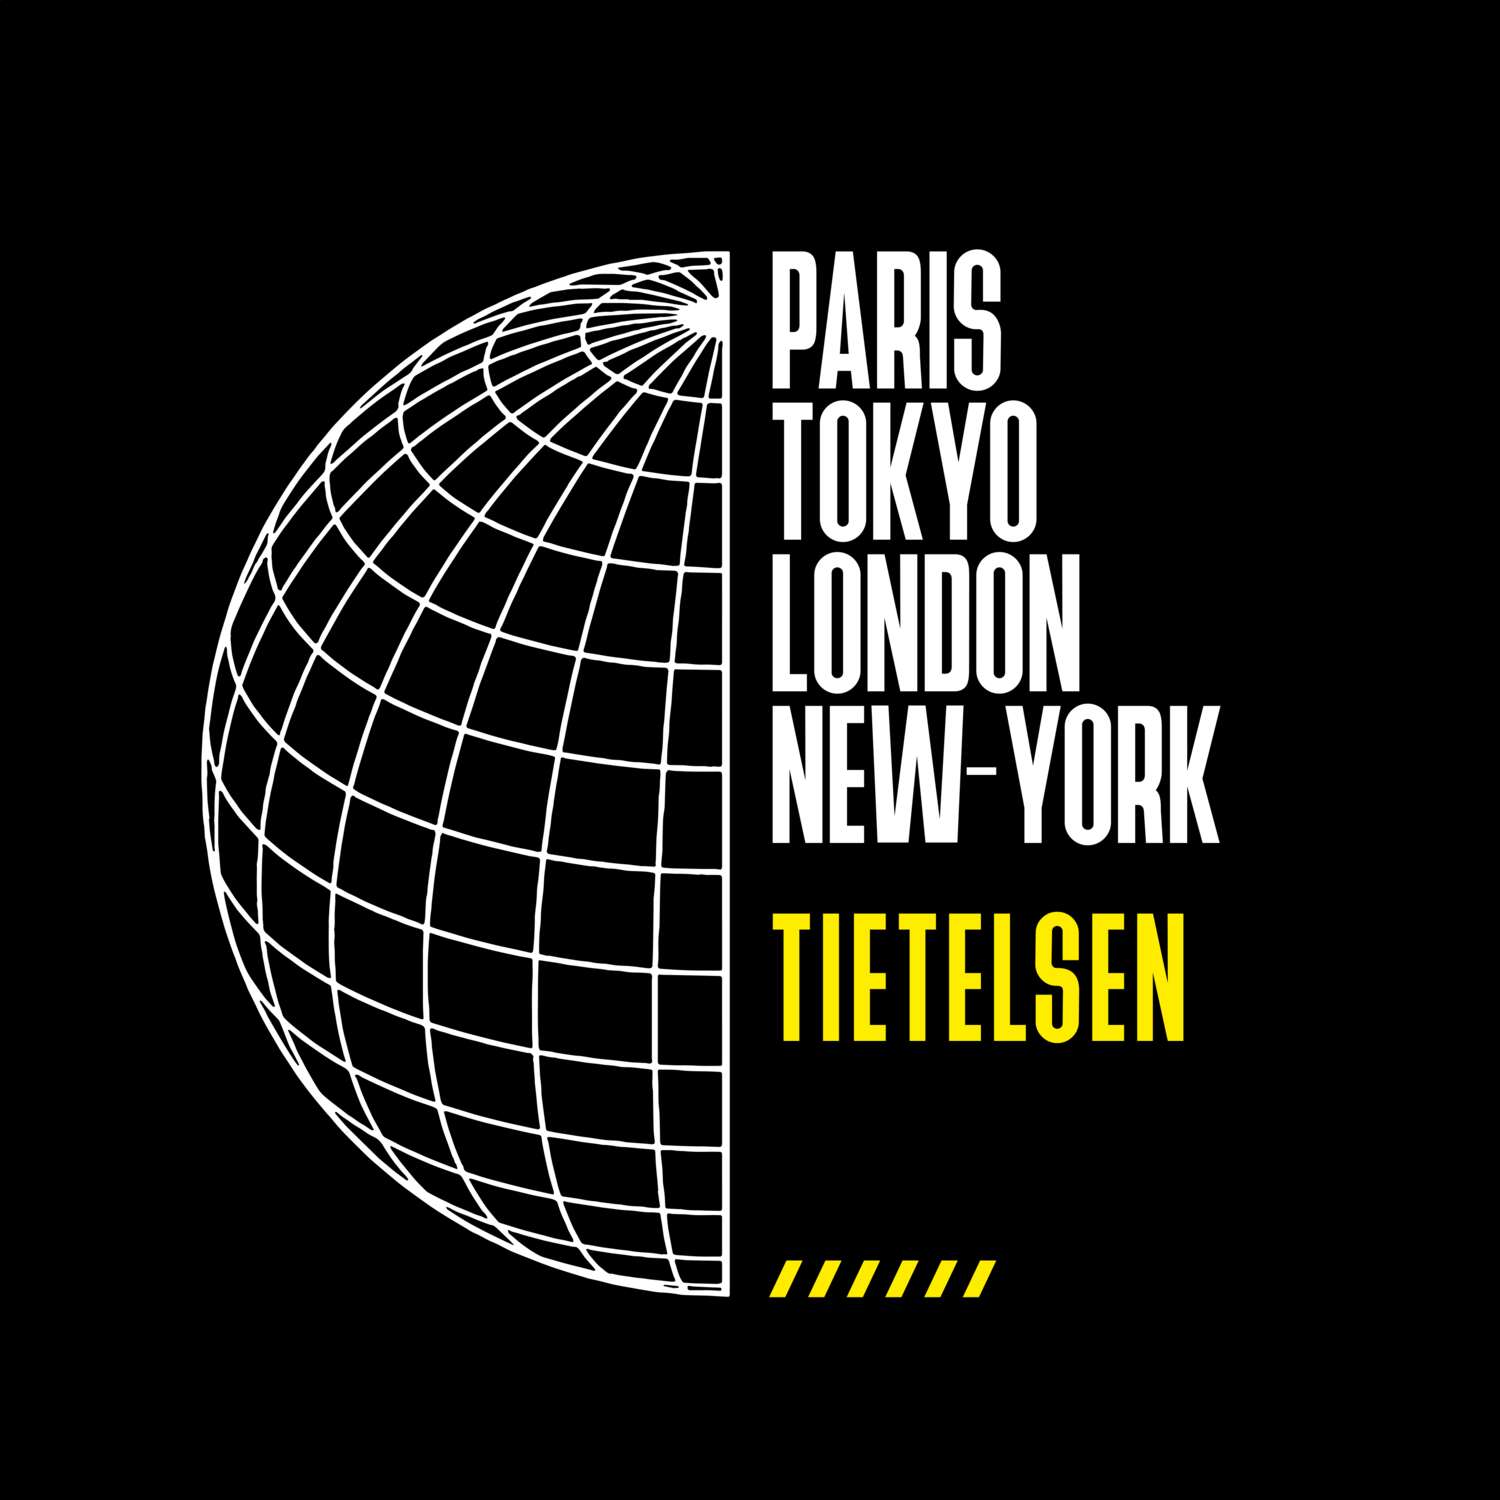 Tietelsen T-Shirt »Paris Tokyo London«